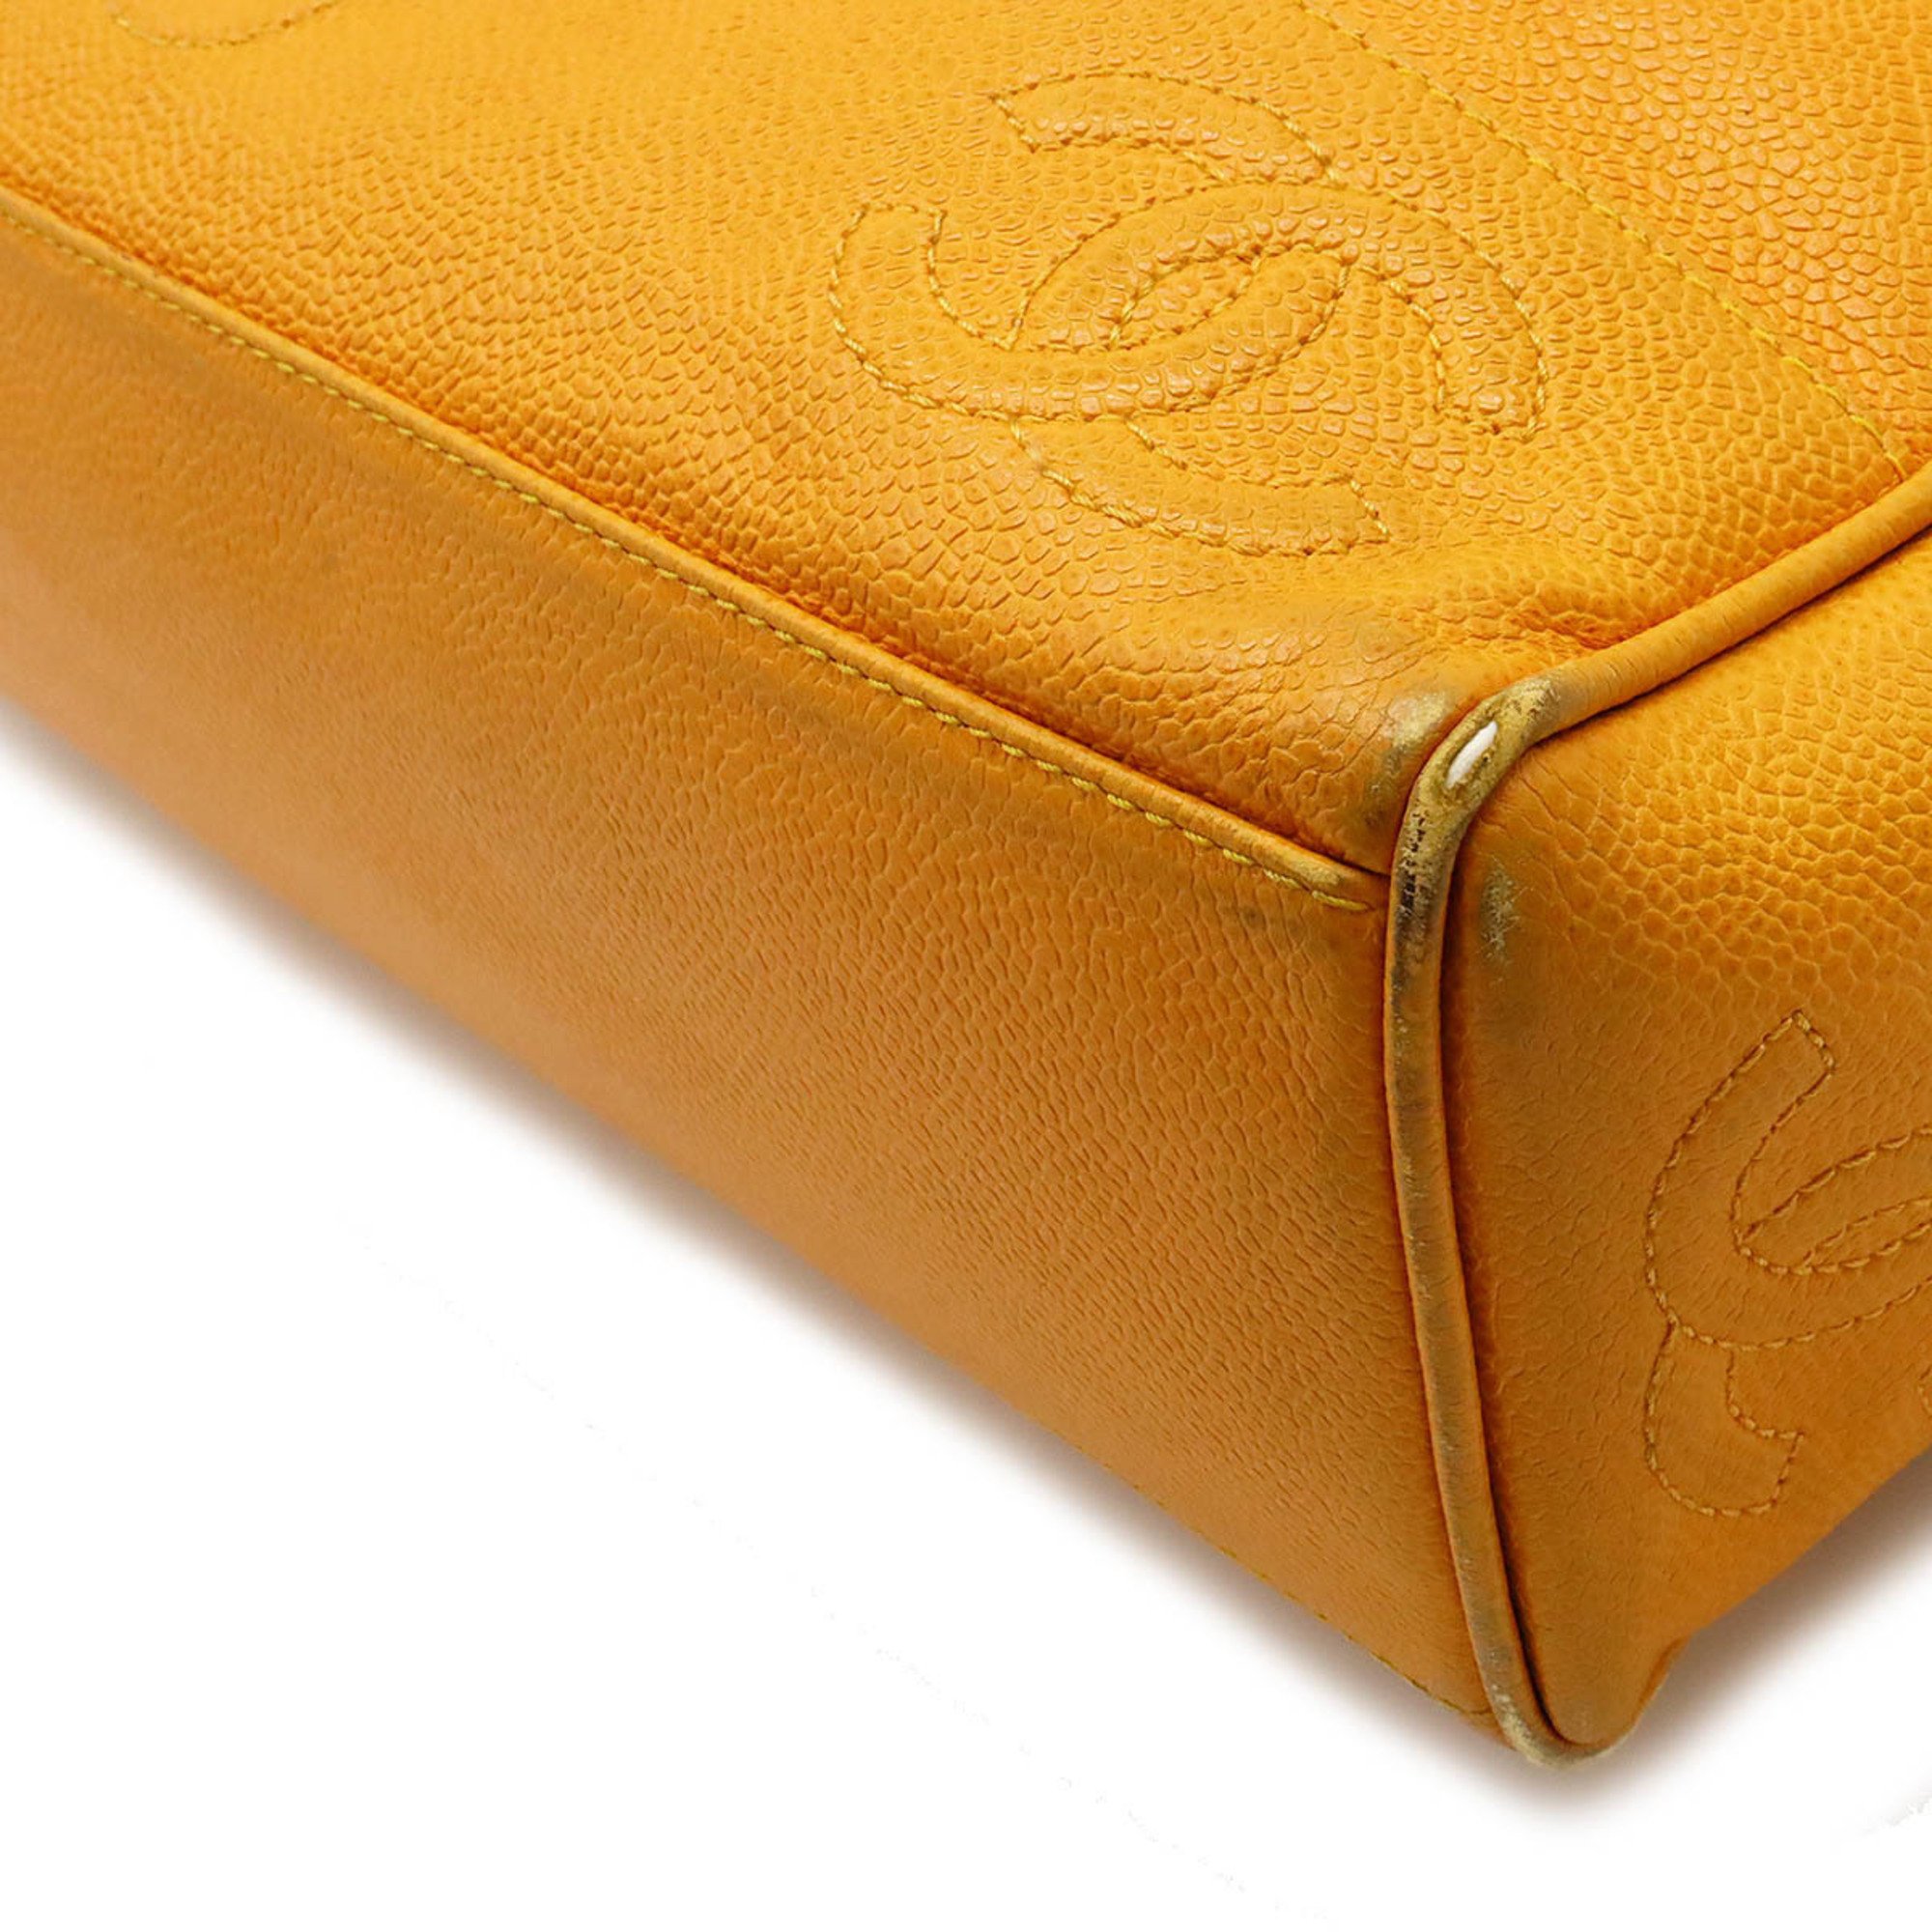 CHANEL Coco Mark Triple Chain Shoulder Bag Tote Caviar Skin Leather Yellow